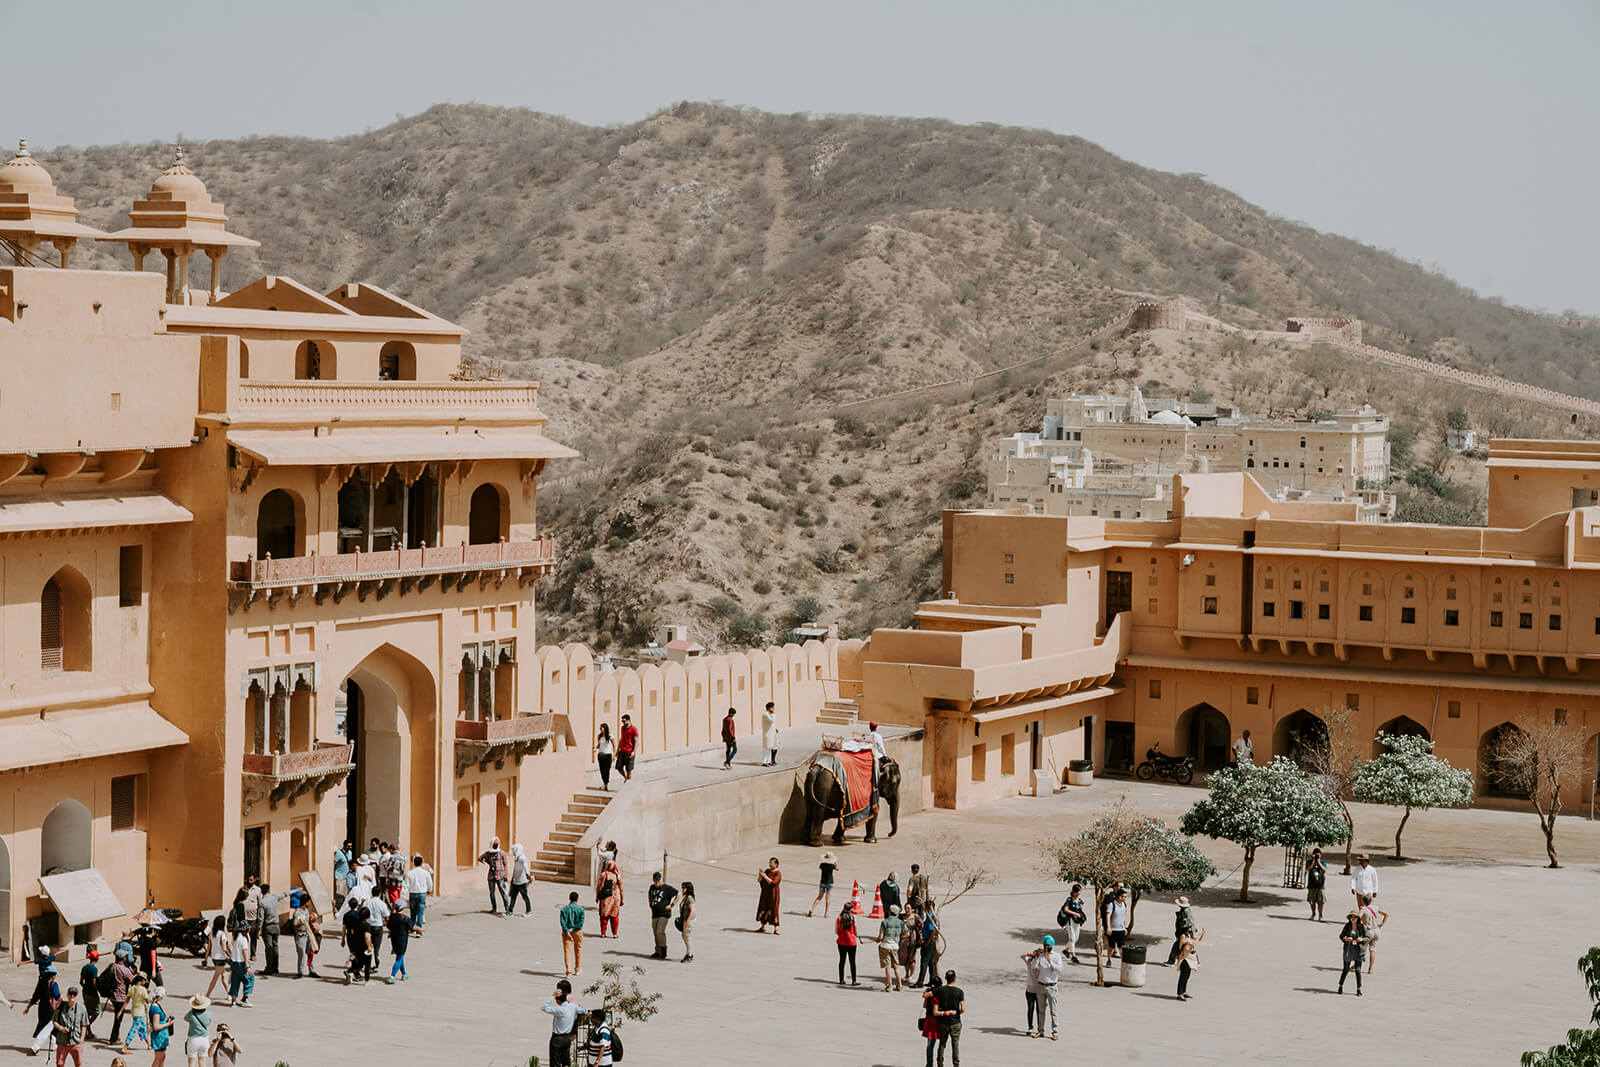 Royal Rajasthan: Breathtaking Forts, Palaces & Architecture | HoliDaze